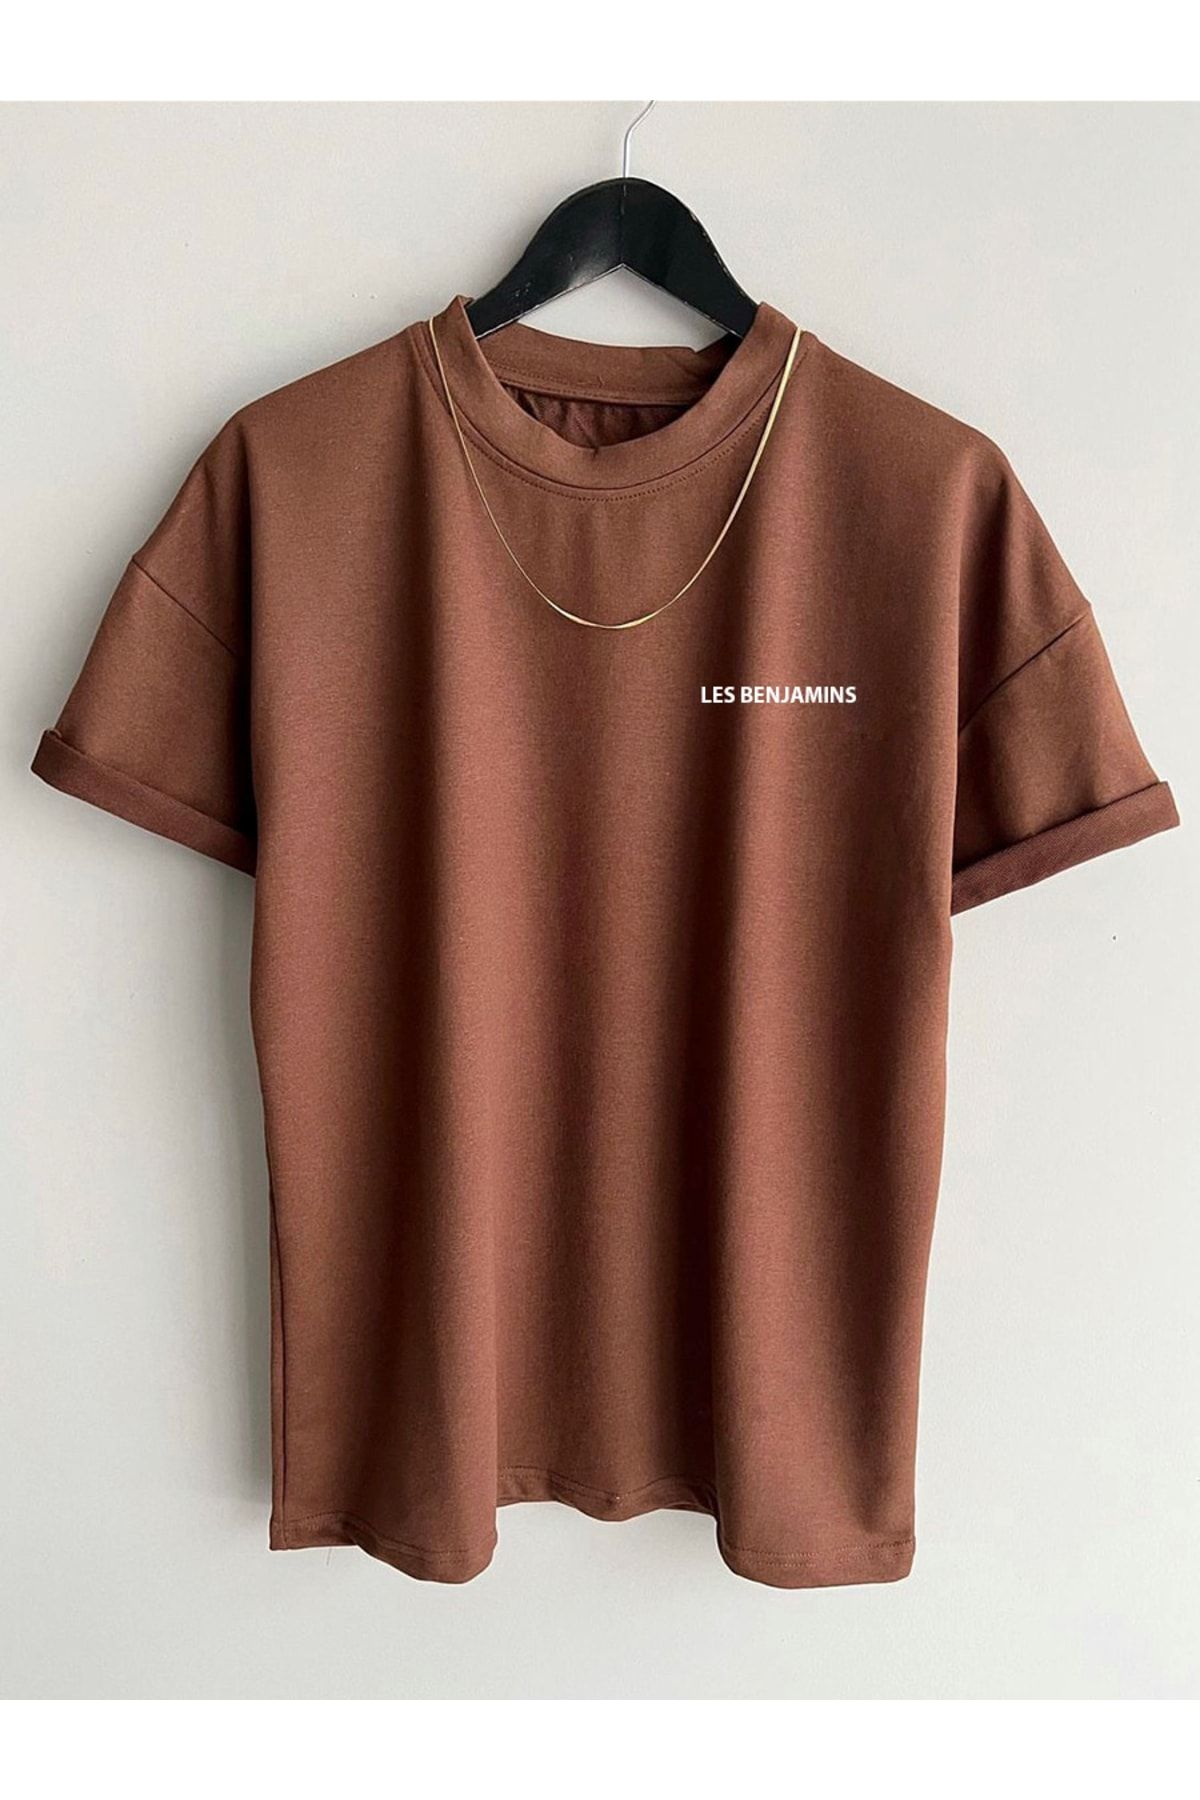 S&A DESIGN S&a Design Unisex Yazılı Oversize T-shirt